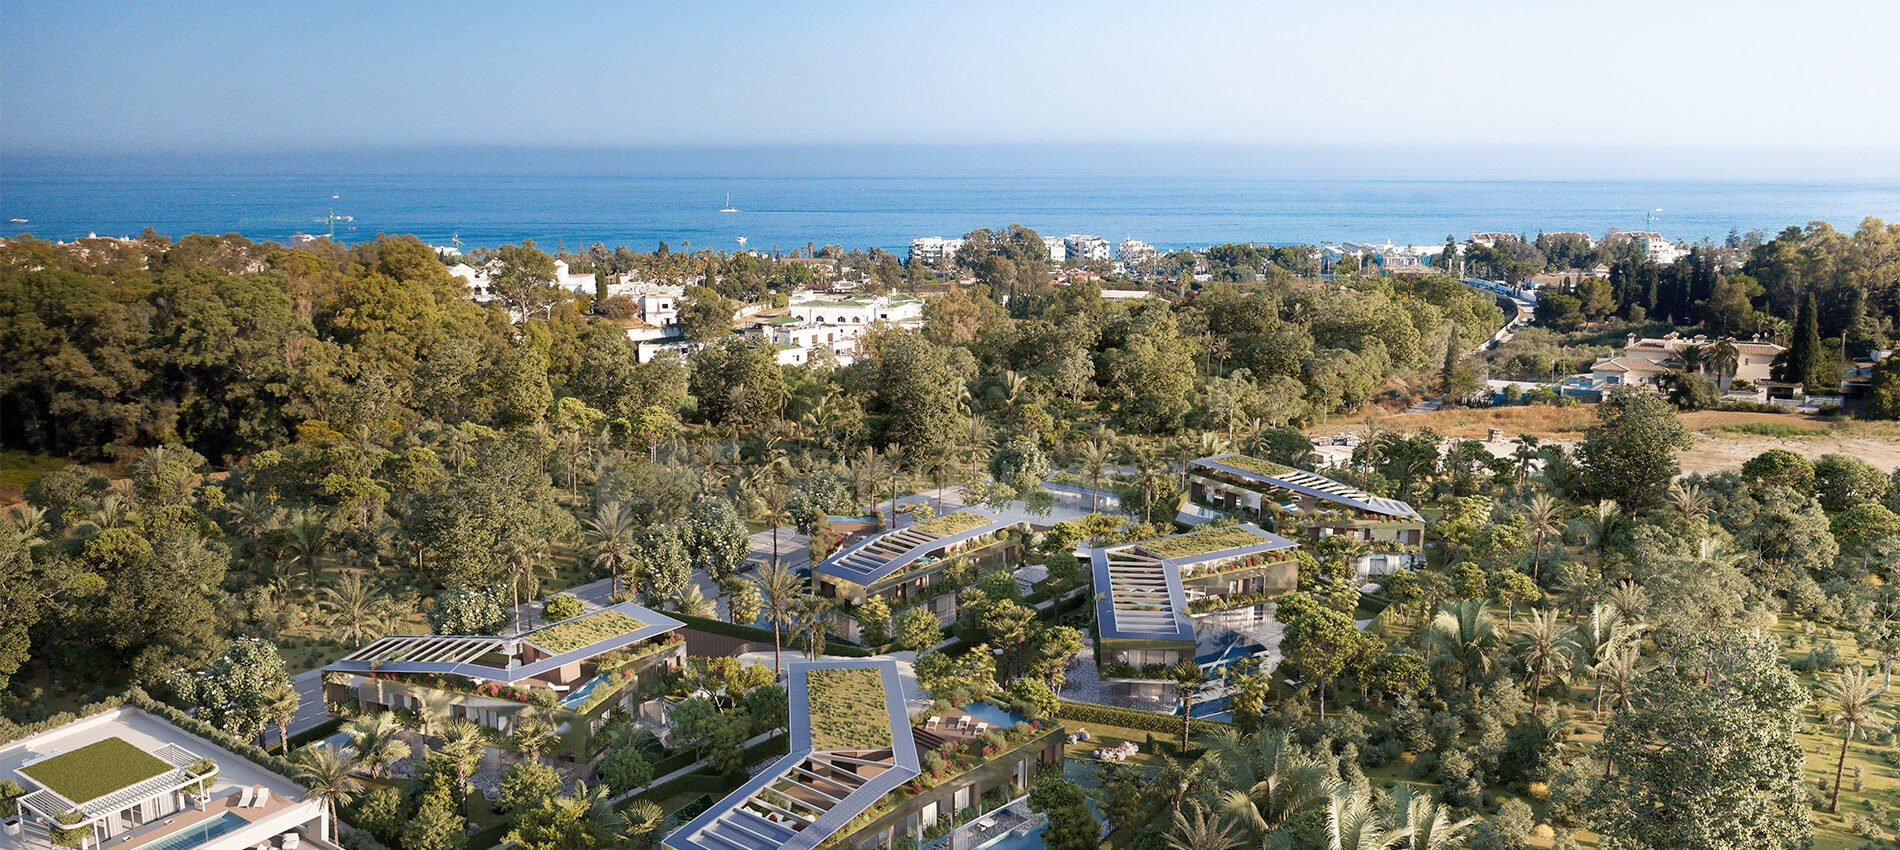 The luxury Karl Lagerfeld Villas of Marbella’s Golden Mile